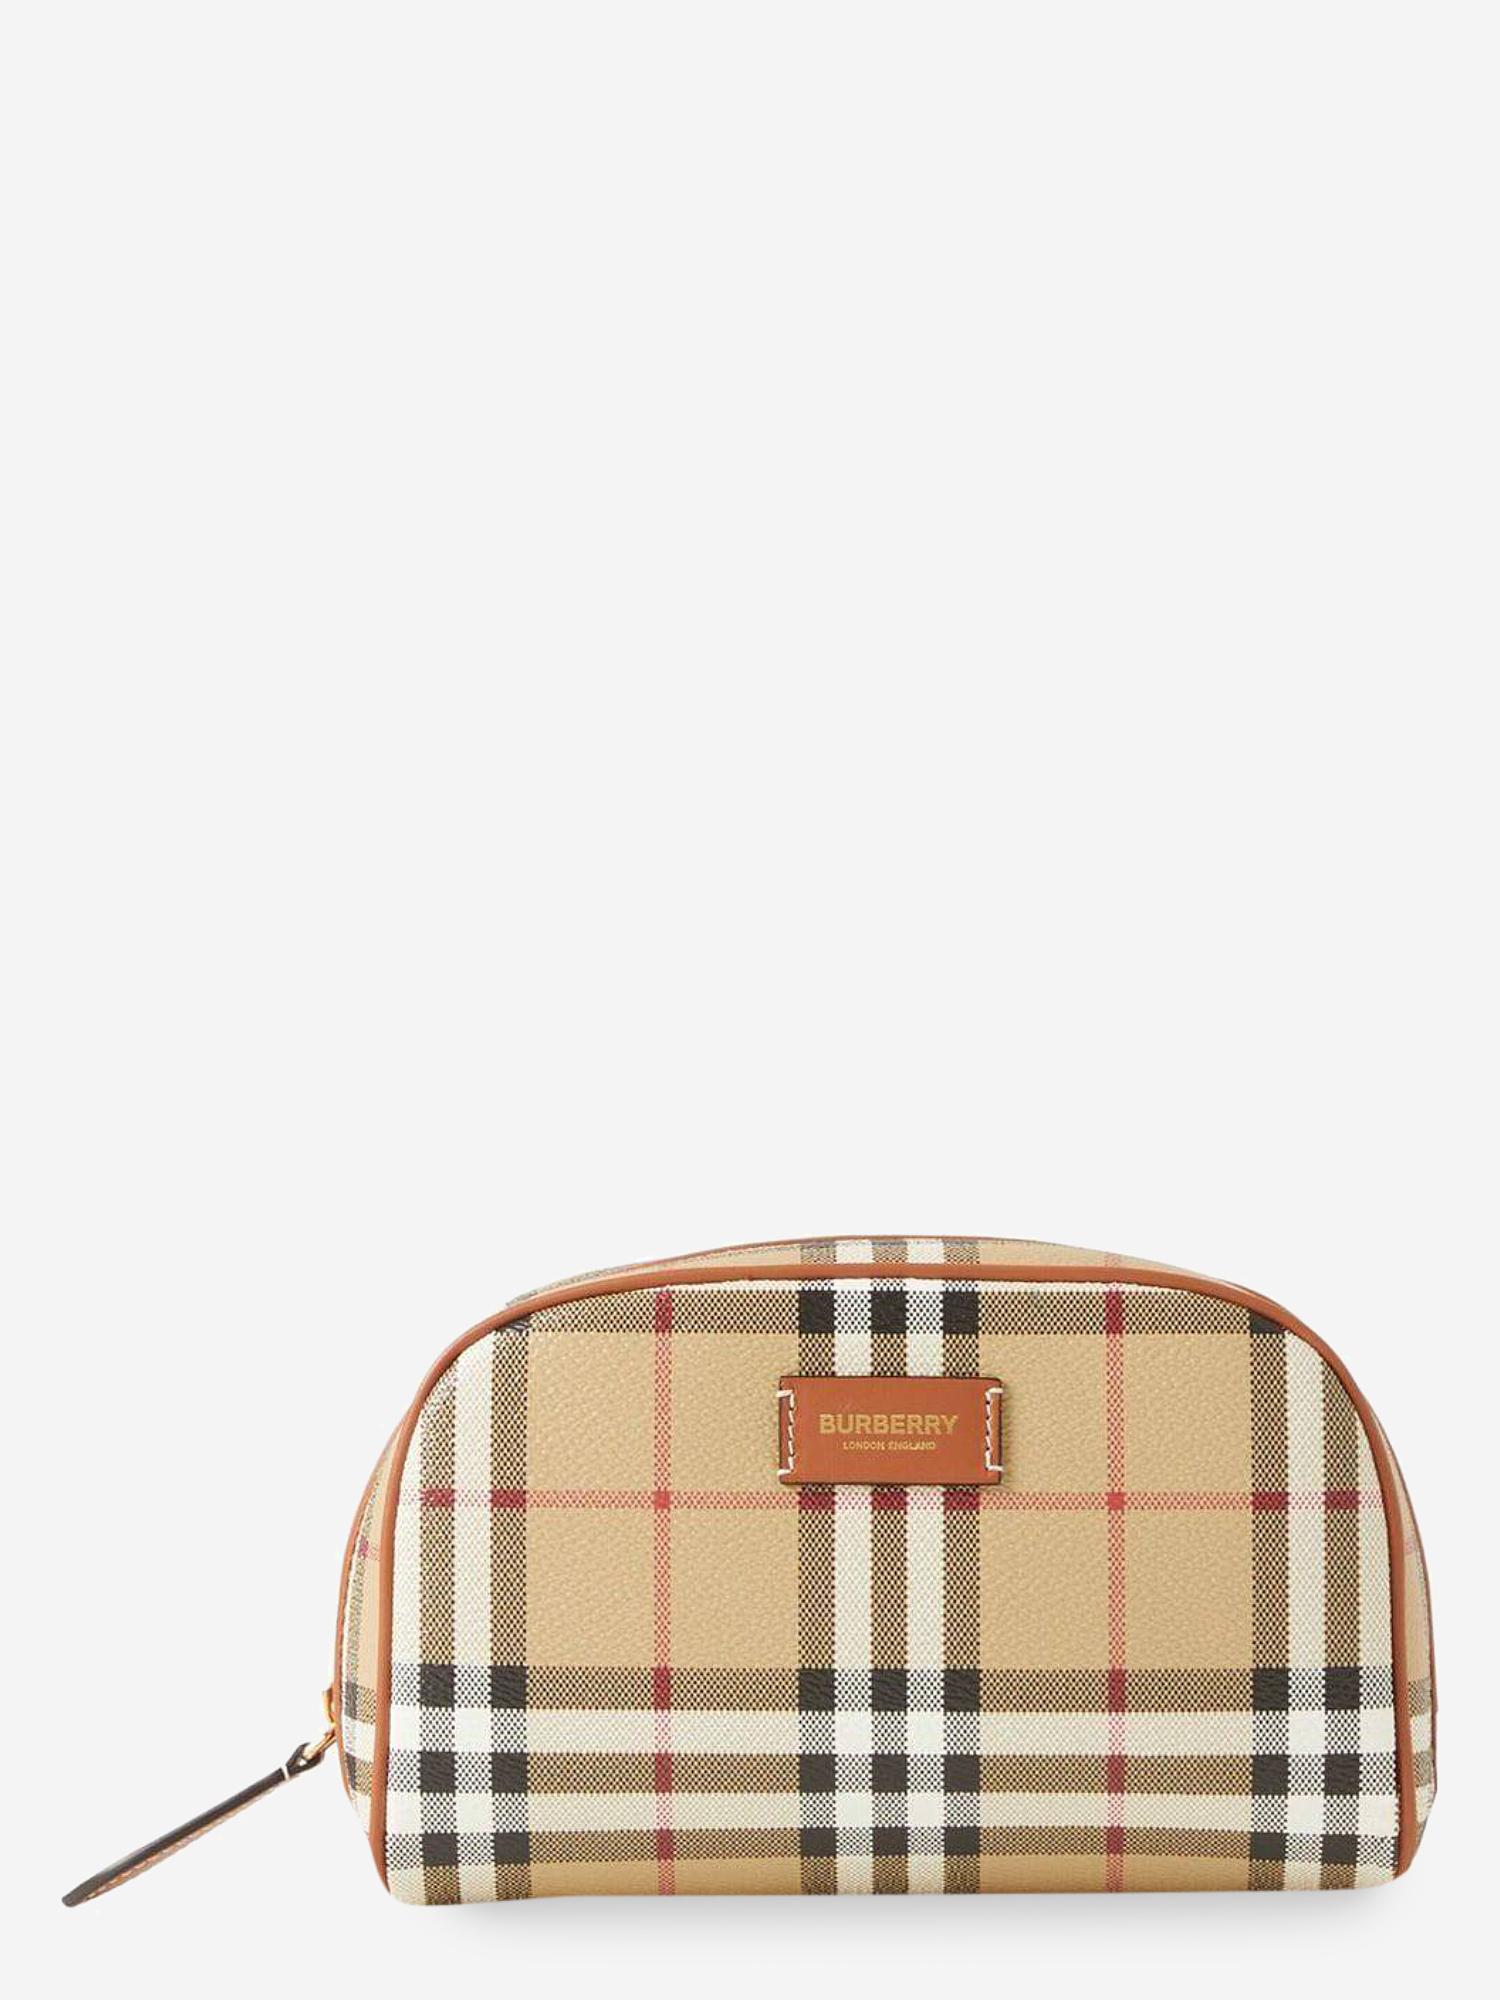 Burberry Handbags - Lampoo